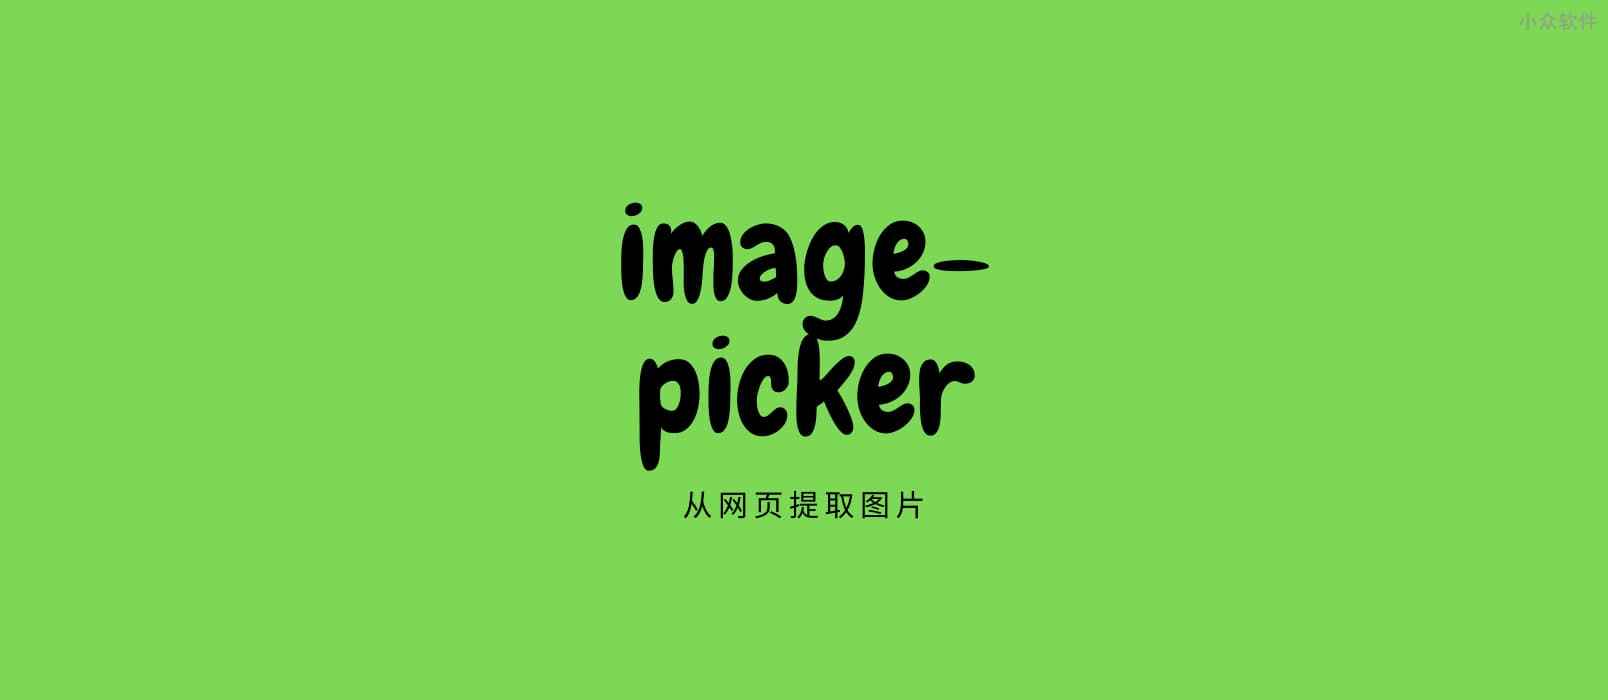 image-picker - 从网页提取不能右键保存的图片[Chrome] 1